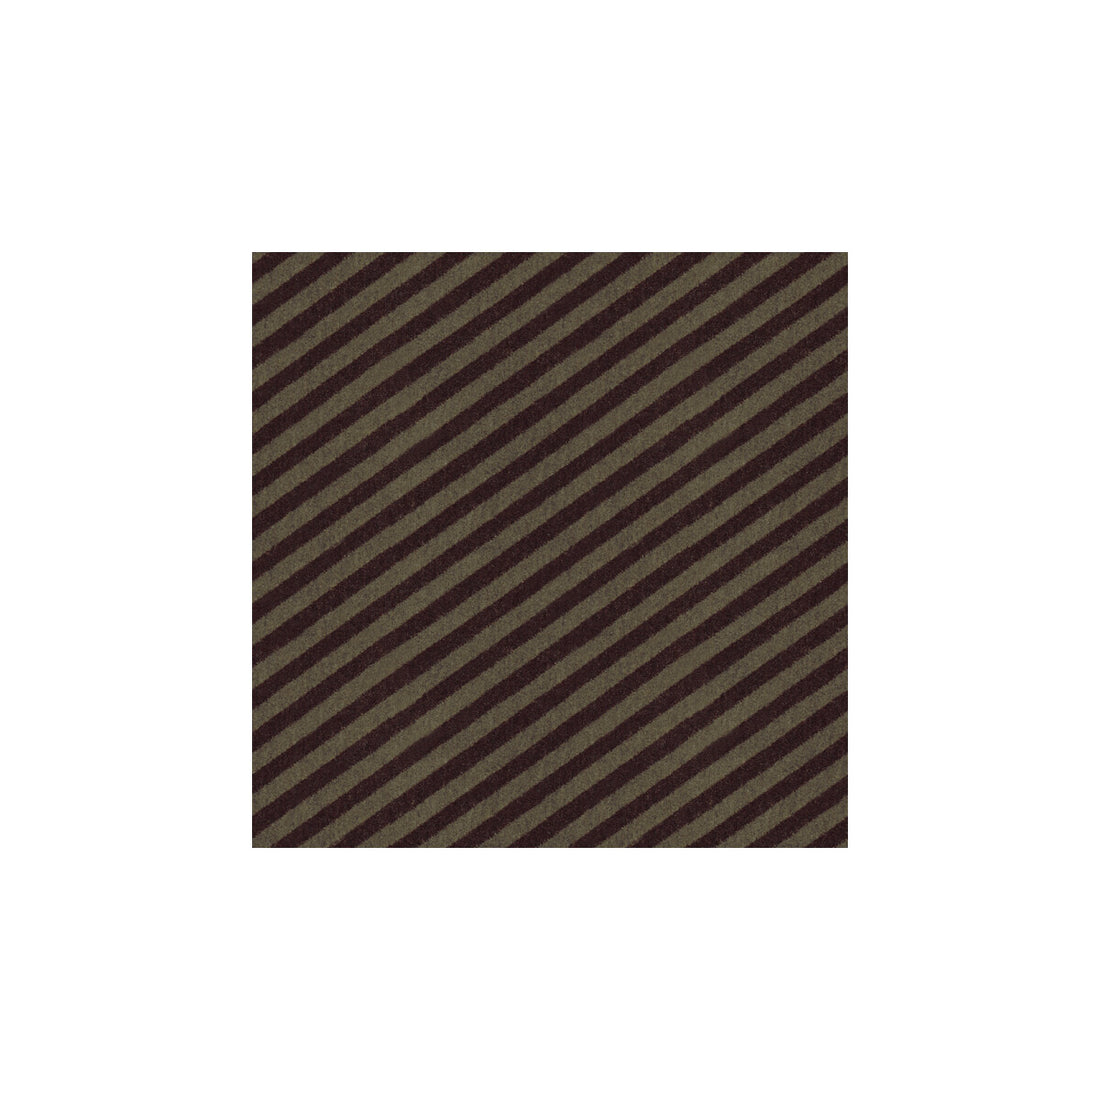 Oblique fabric in truffle/grey color - pattern GWF-3050.611.0 - by Lee Jofa Modern in the Kelly Wearstler II collection